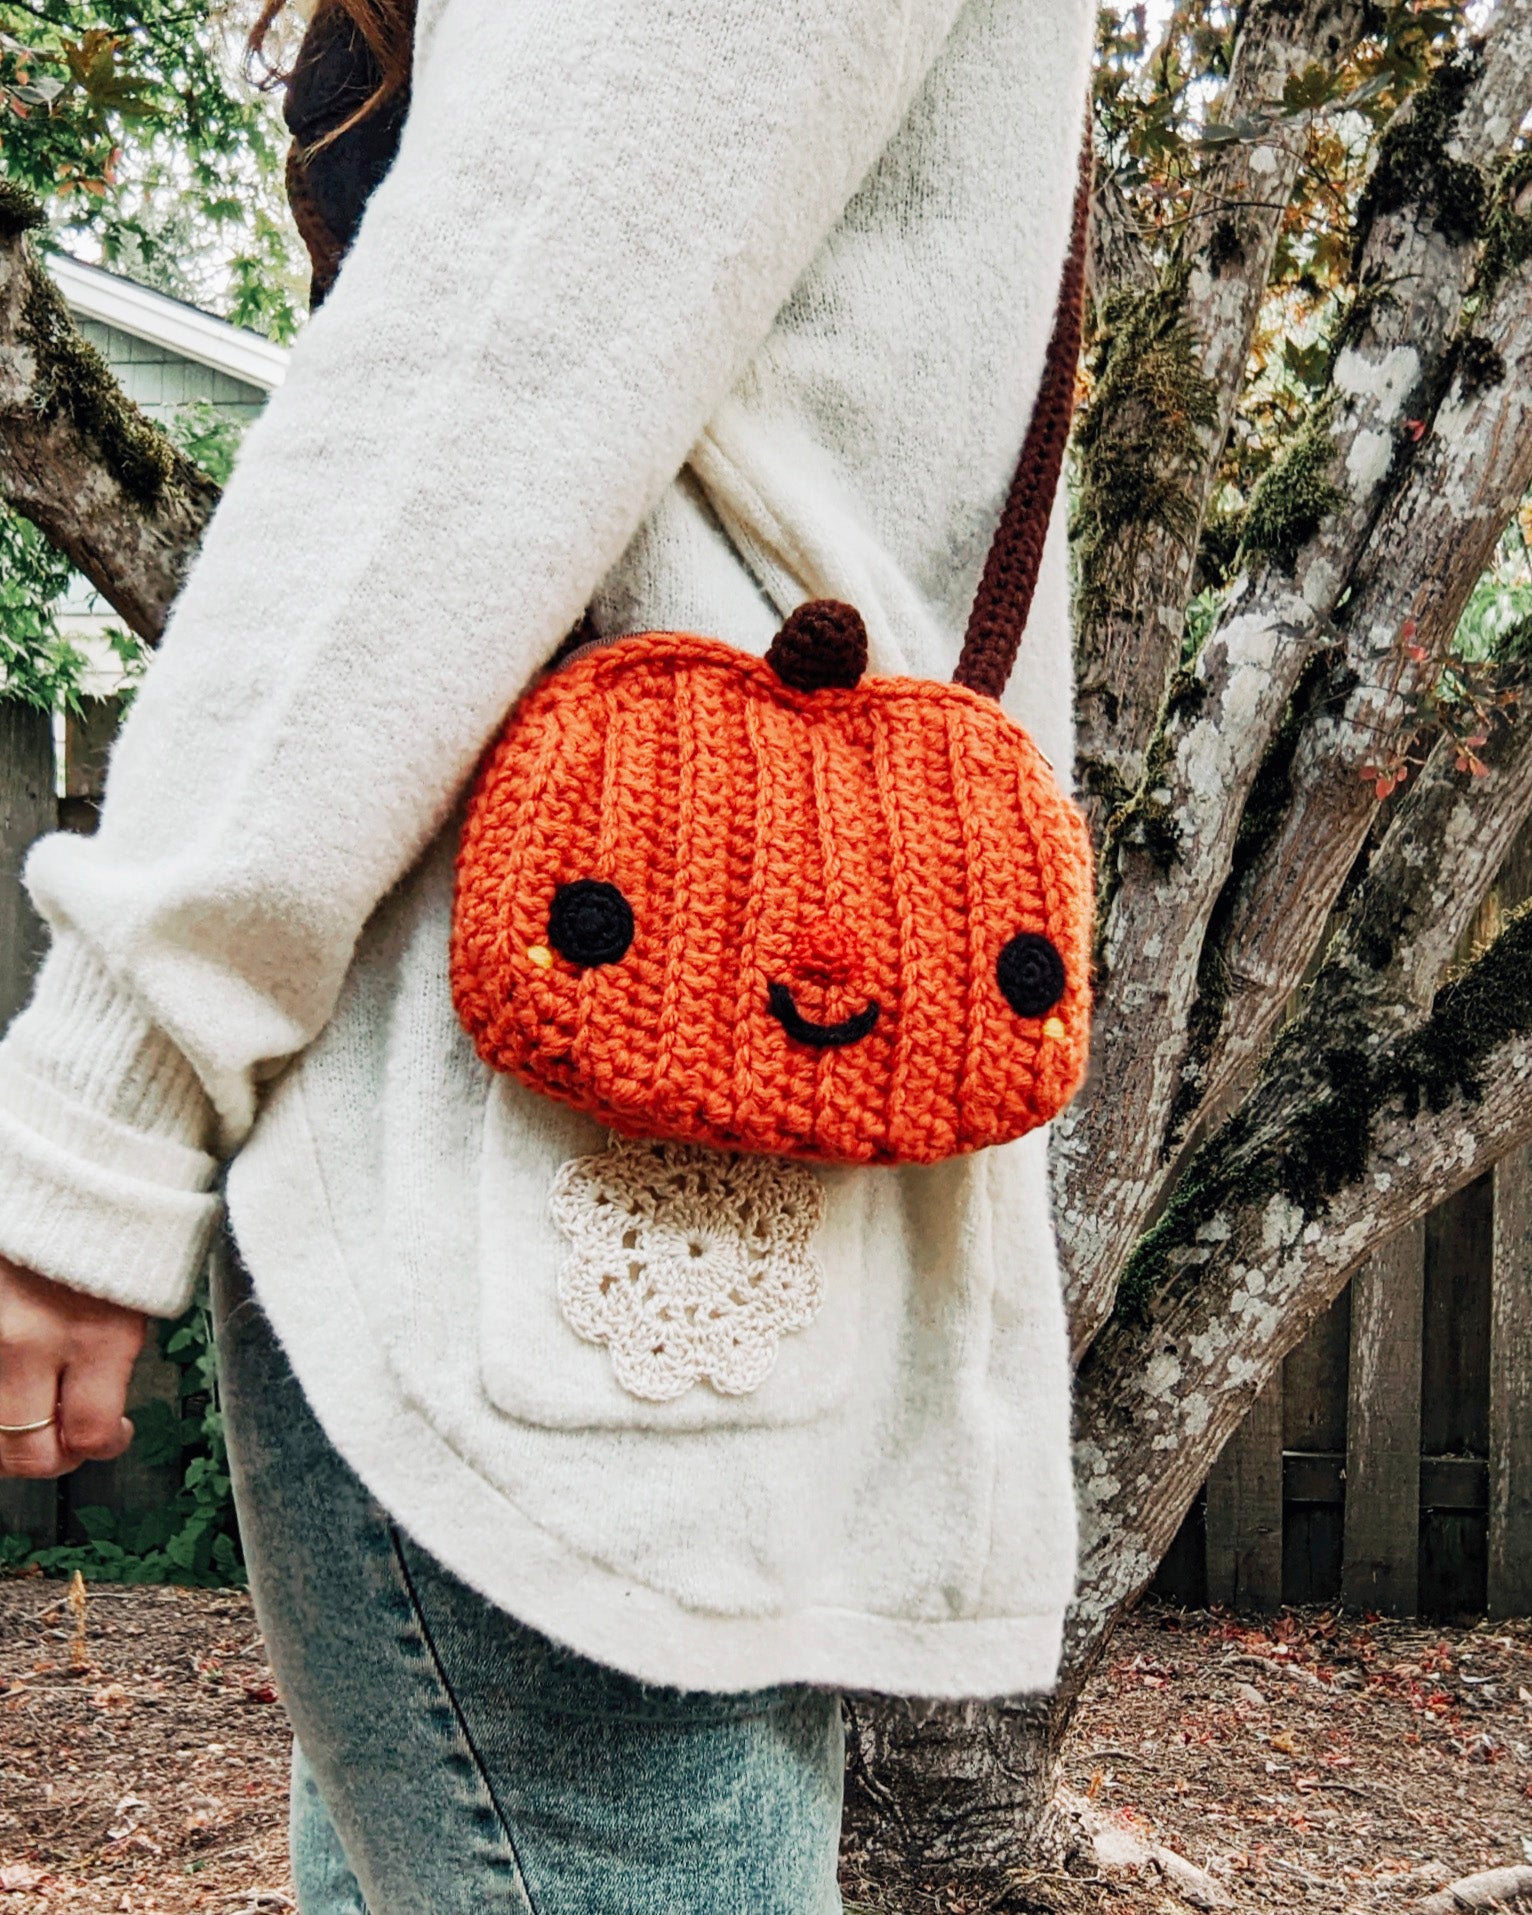 Moring Glory ~Halloween Pumpkin Lolita Bag